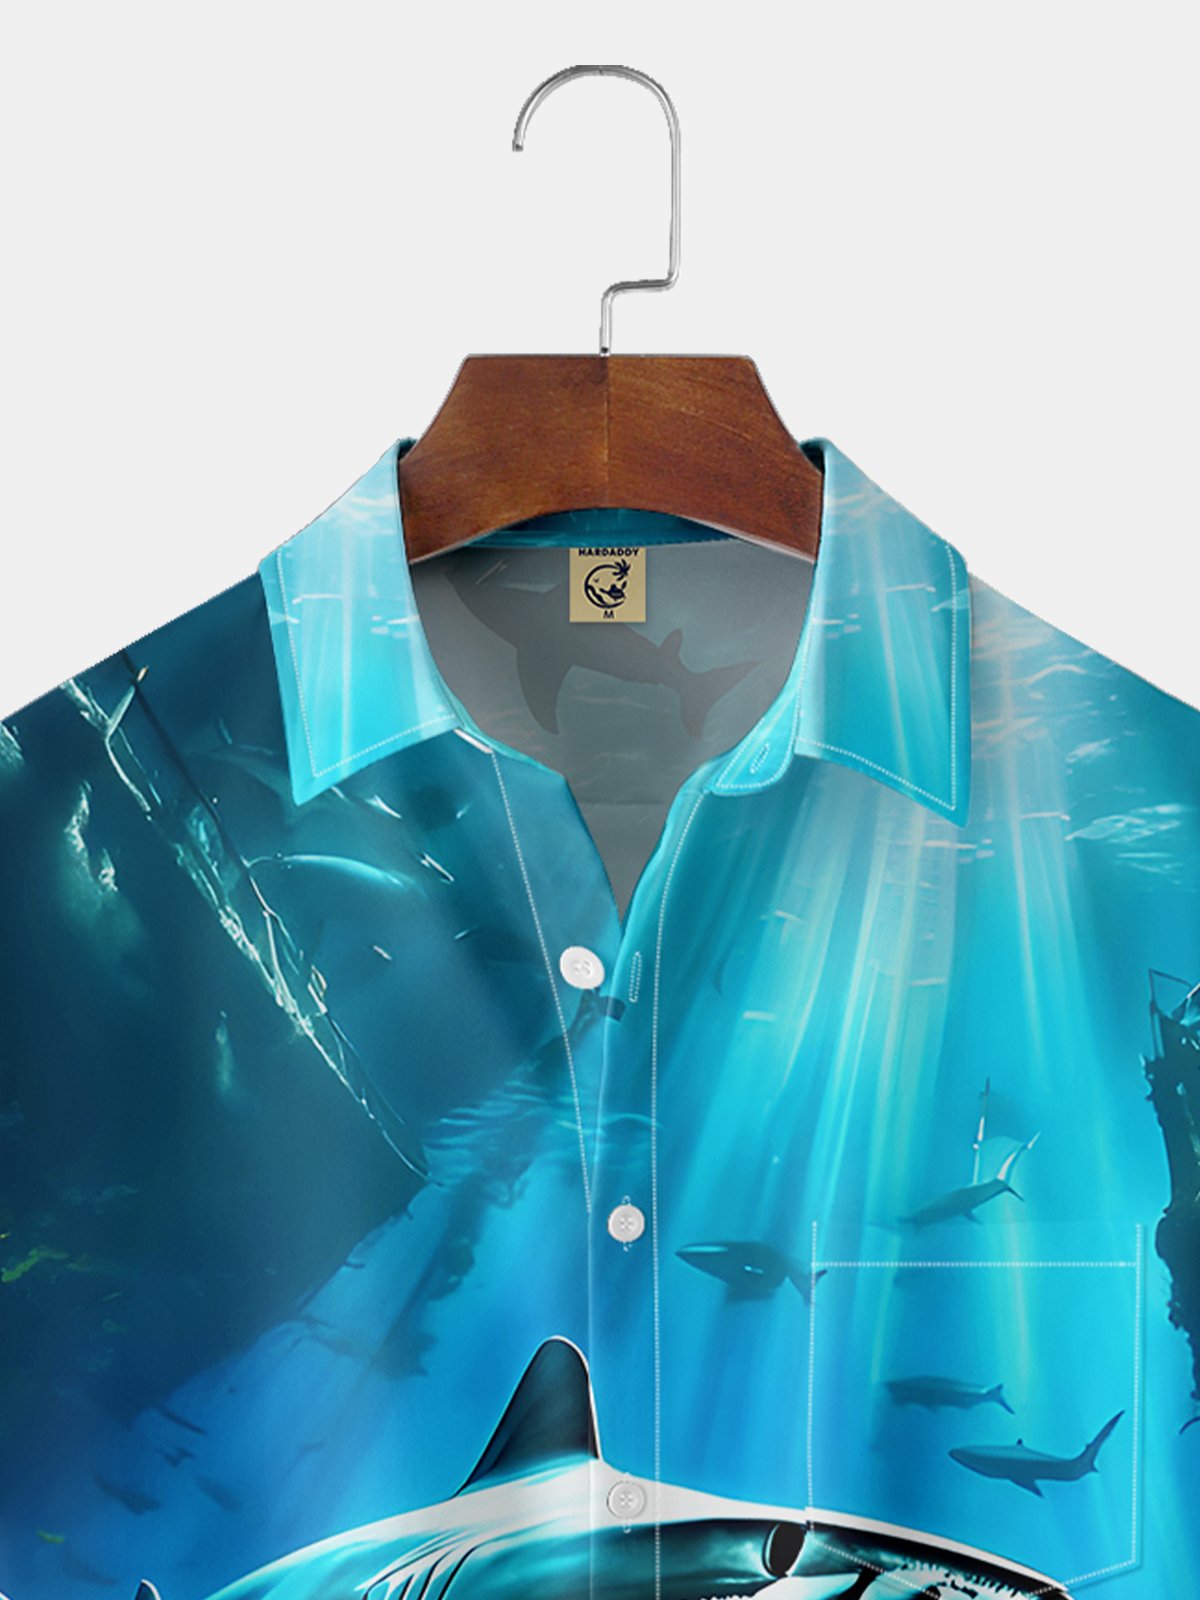 Hardaddy Moisture-wicking Ocean Shark Chest Pocket Hawaiian Shirt